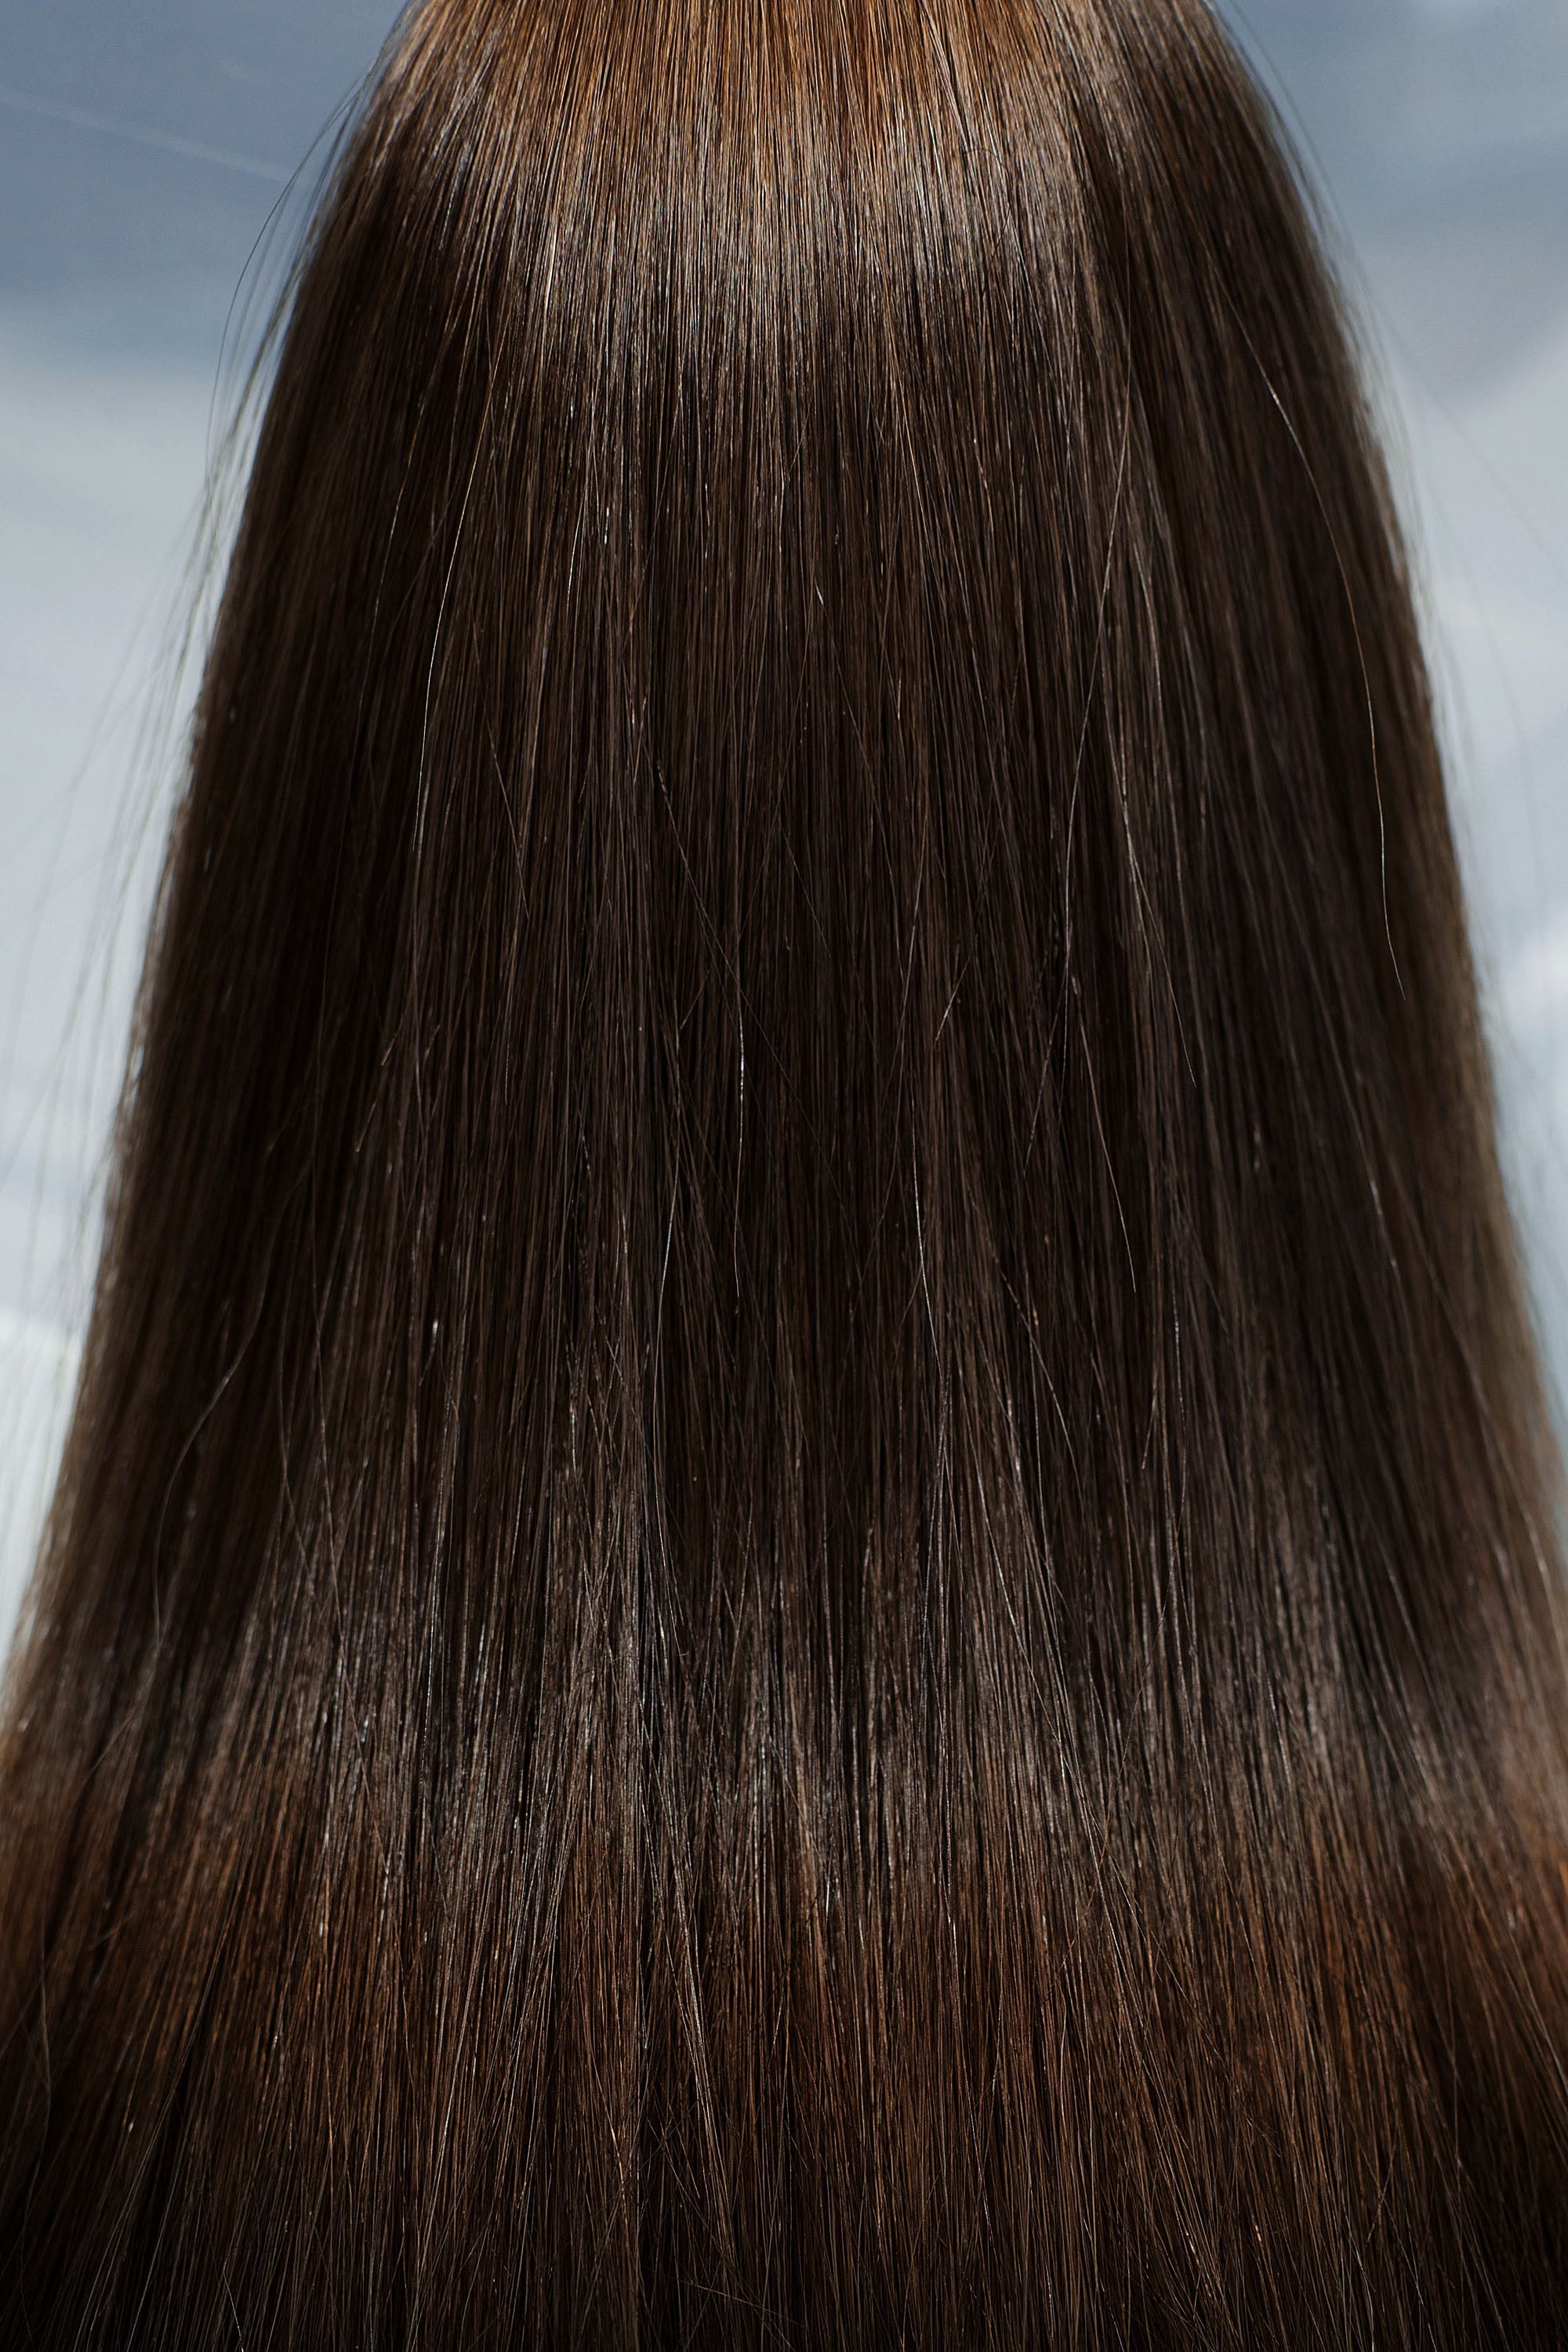 Behair professional Keratin Tip "Premium" 26" (65cm) Natural Straight Light Brown #4 - 25g (1g each pcs) hair extensions